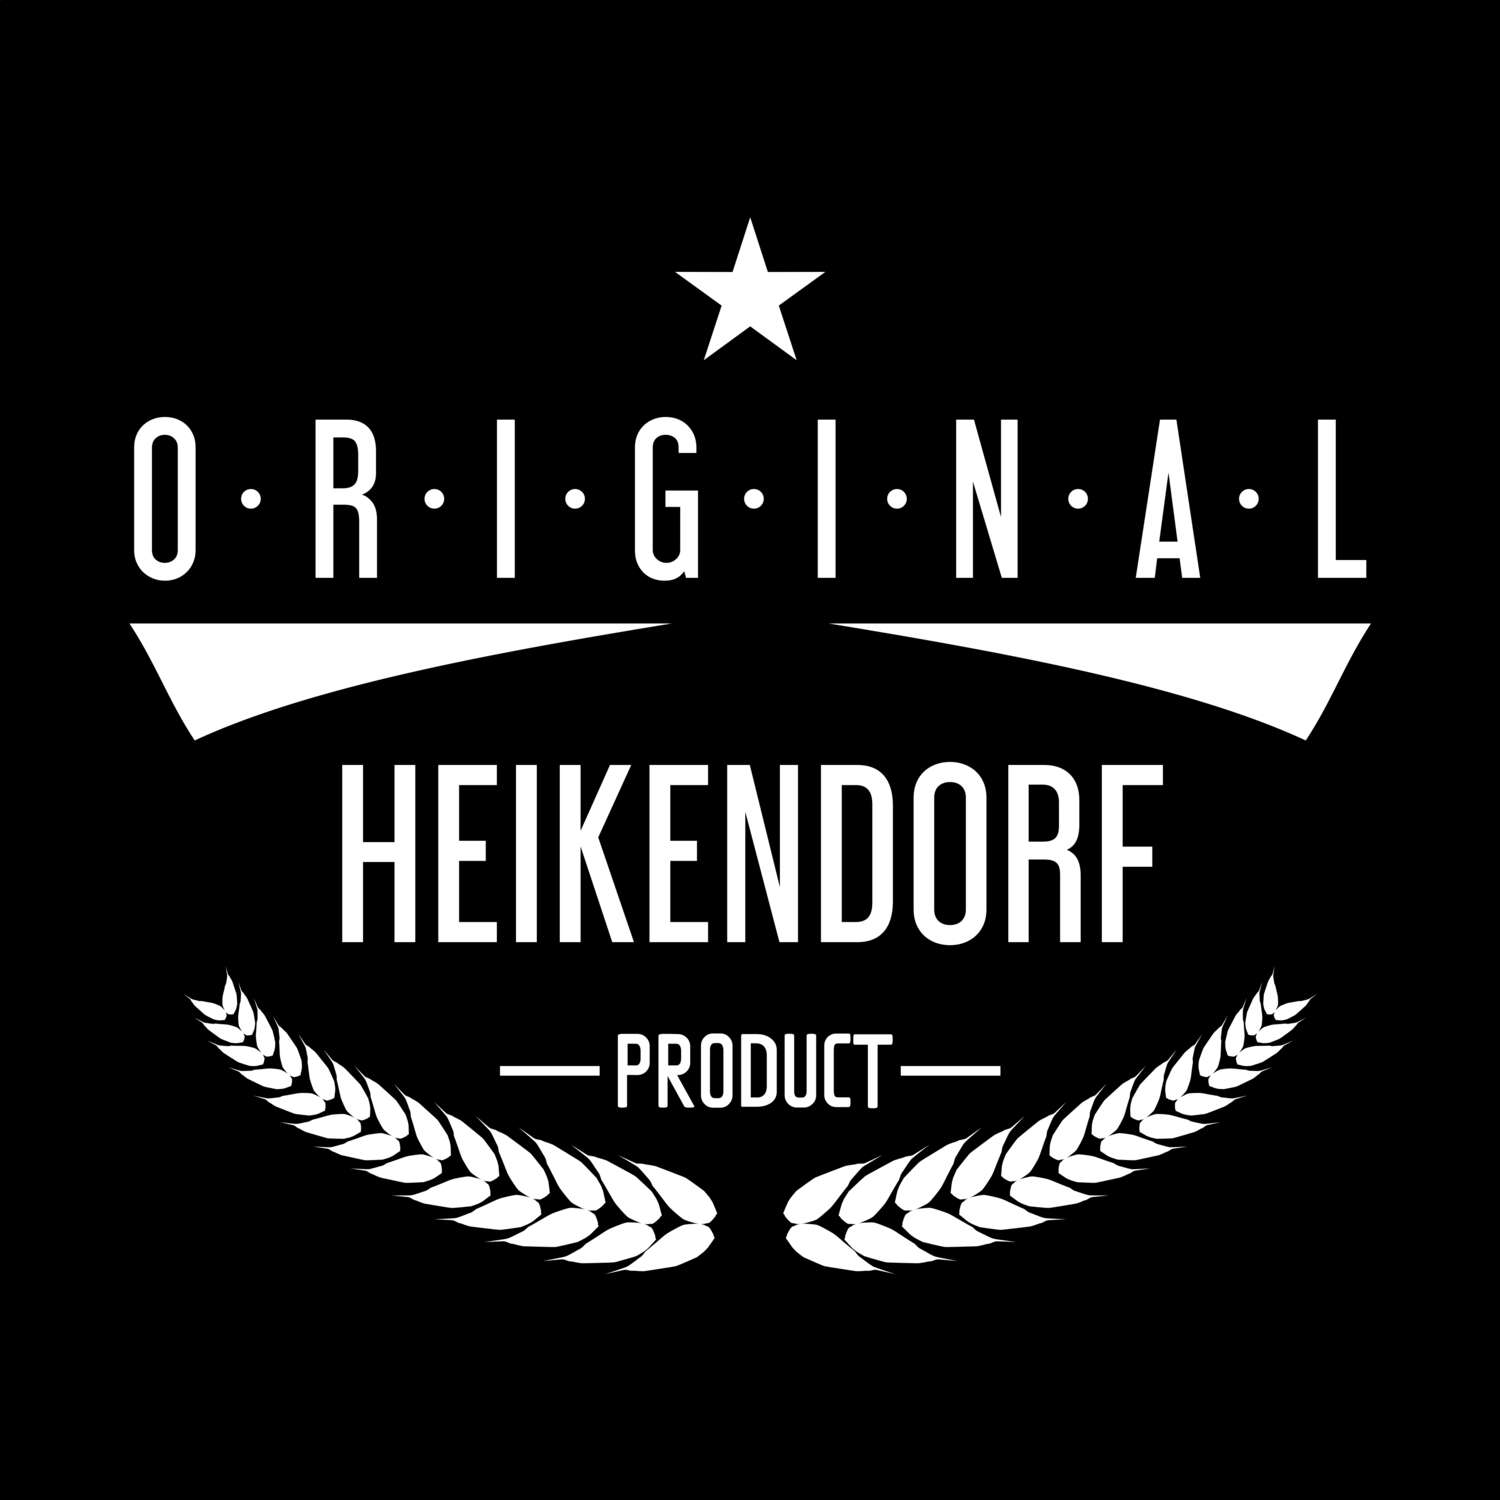 Heikendorf T-Shirt »Original Product«